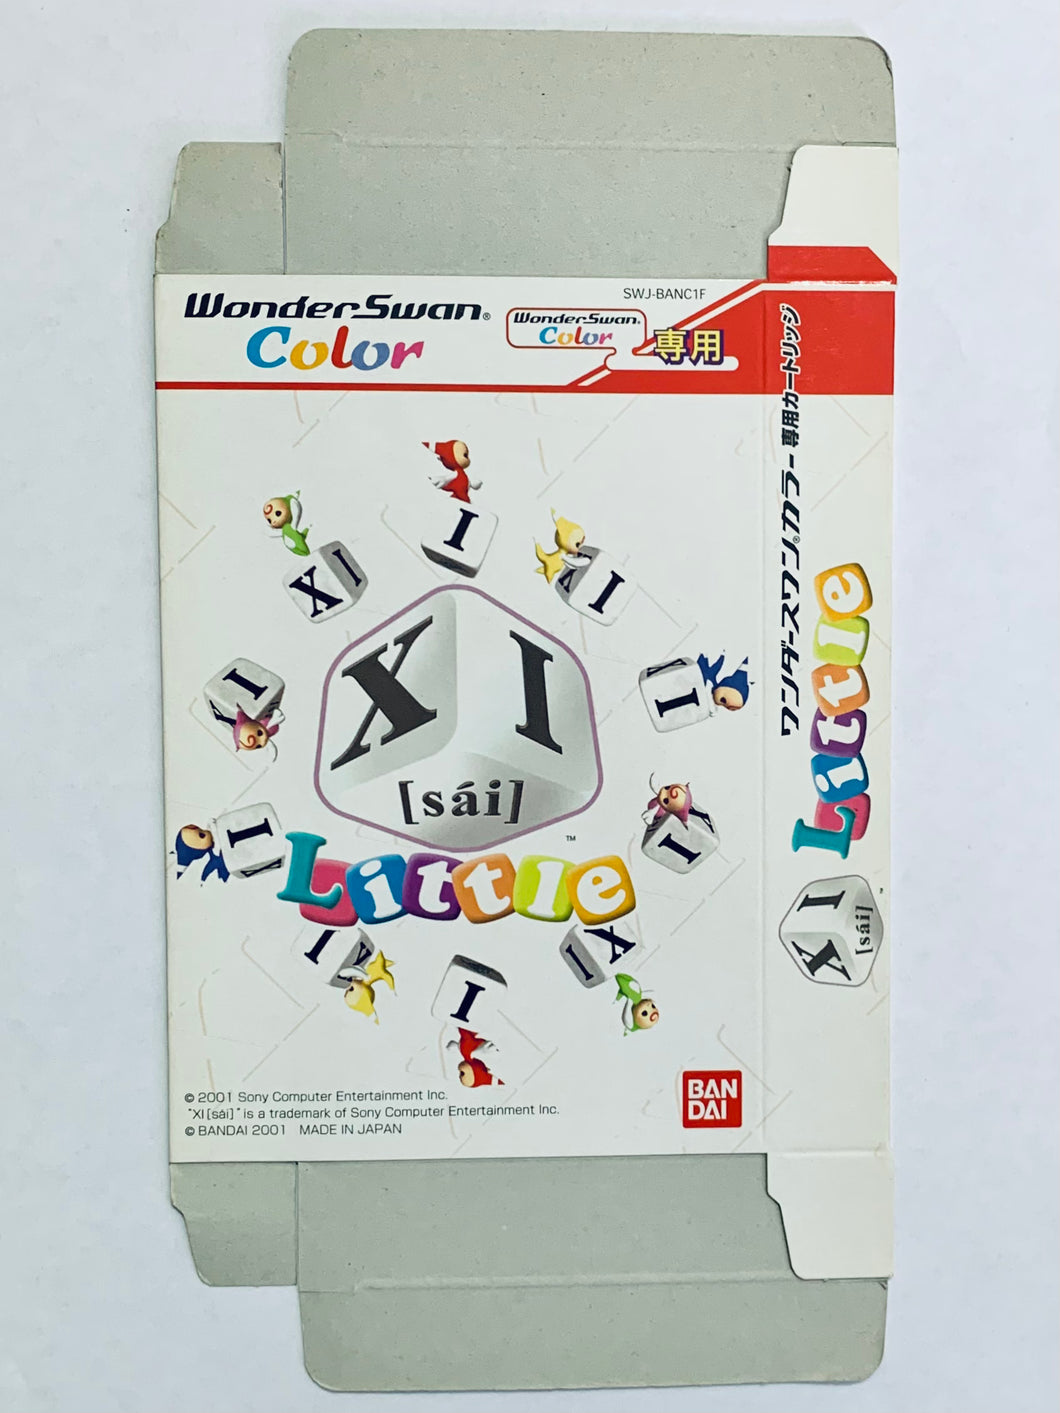 XI [sai] Little - WonderSwan Color - WSC - JP - Box Only (SWJ-BANC1F)